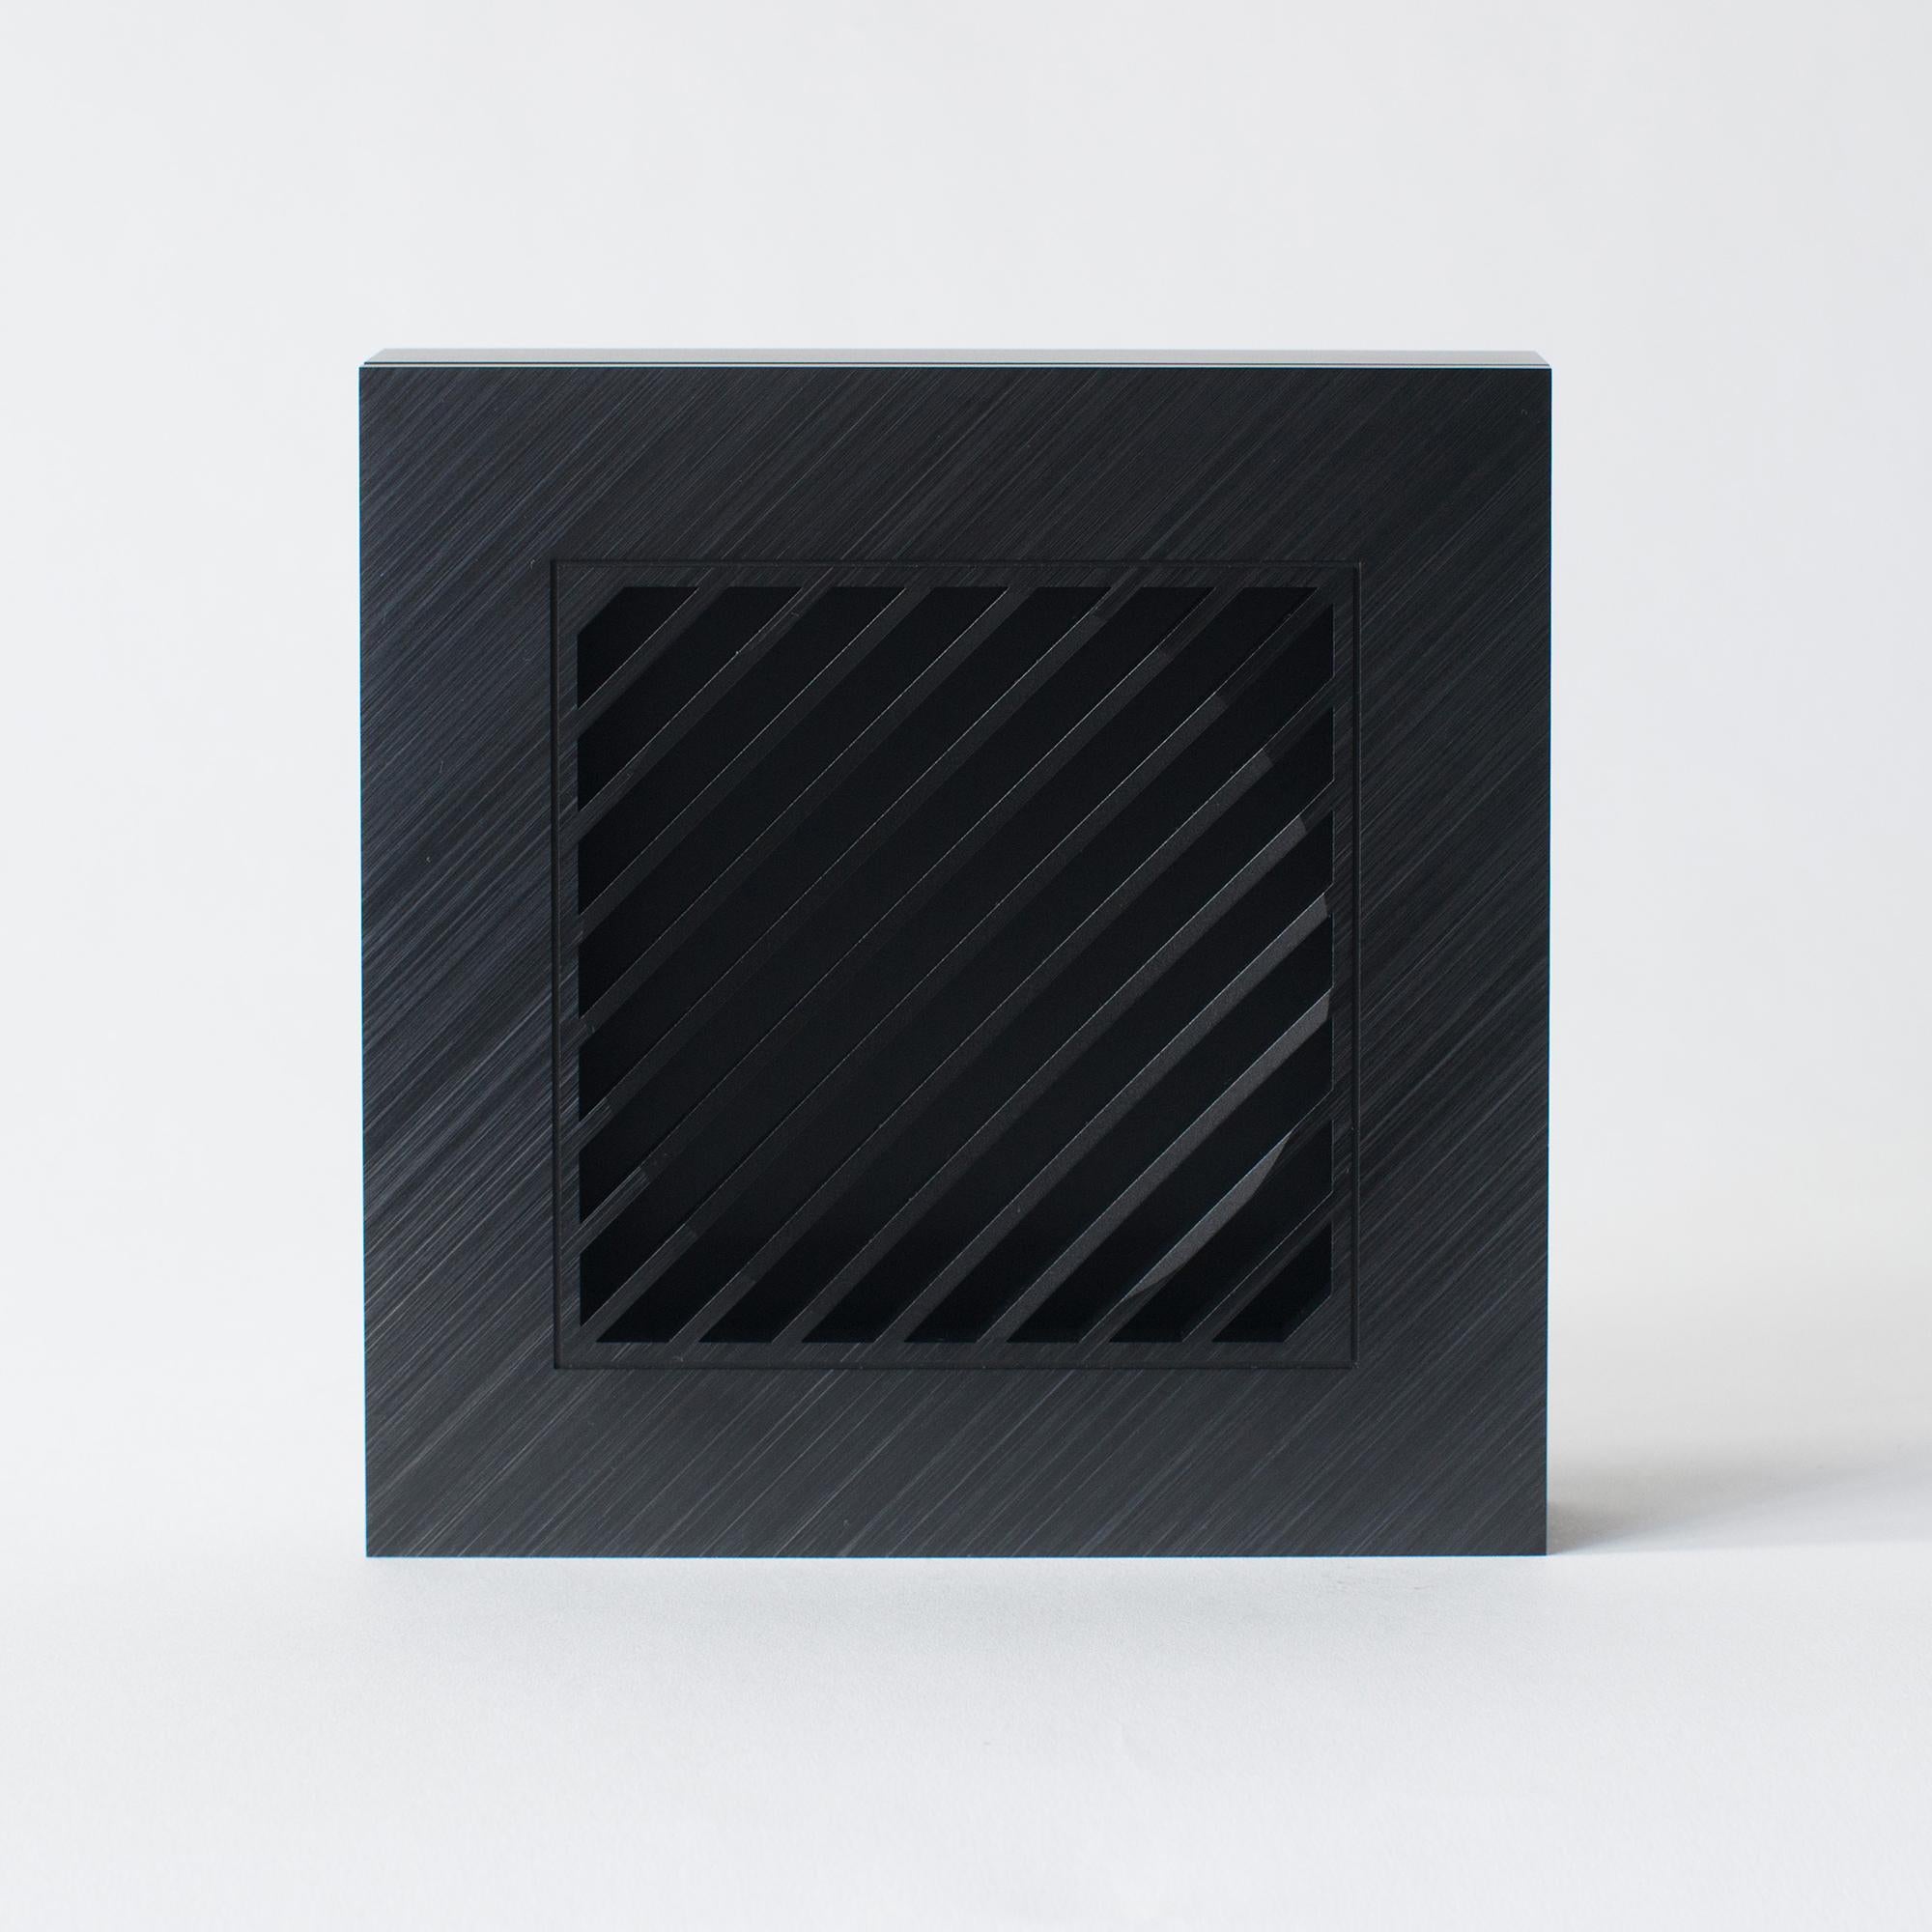 Japonais Cendrier en spirale Shiro Kuramata2 Design japonais minimaliste en vente